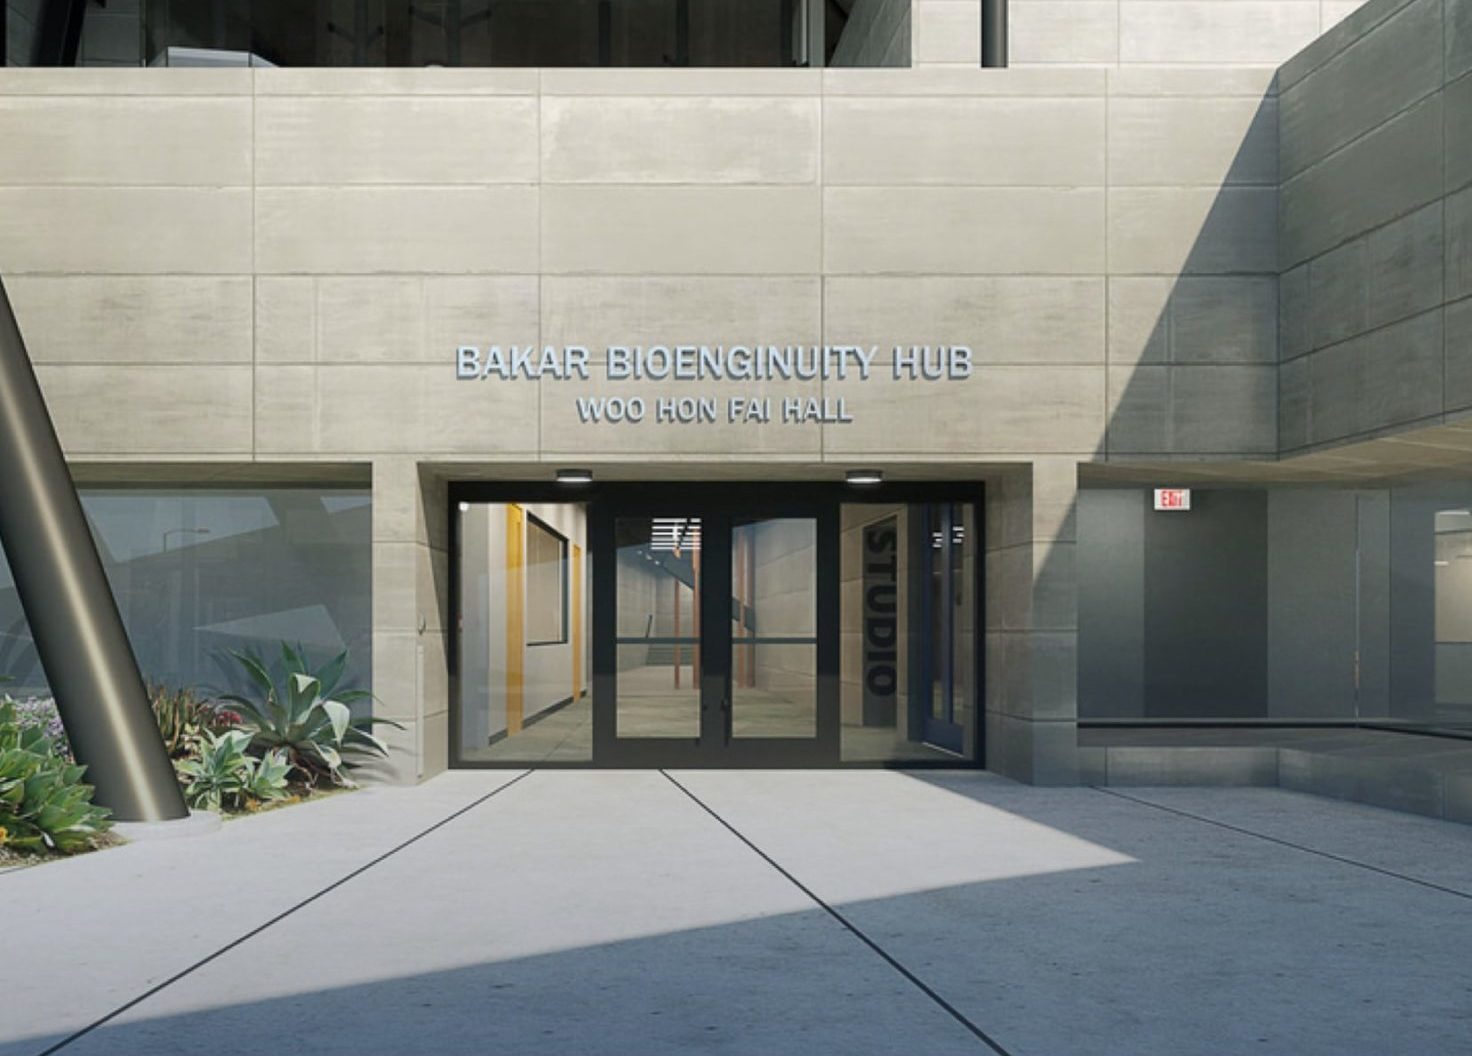 entrance to bakar bioenginuity hub